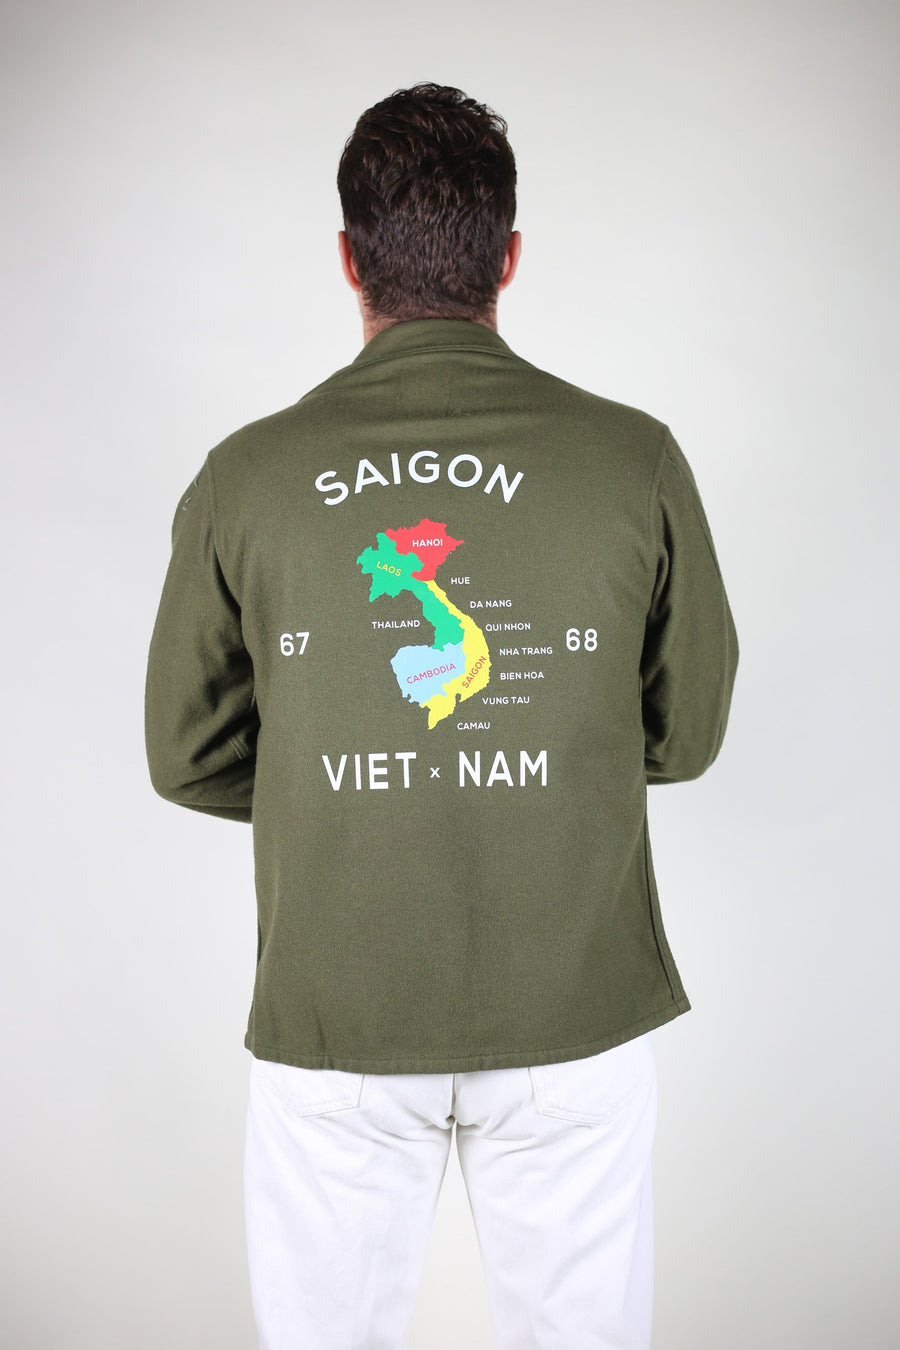 Og 108 US Army Korea era 1950s shirt - L -